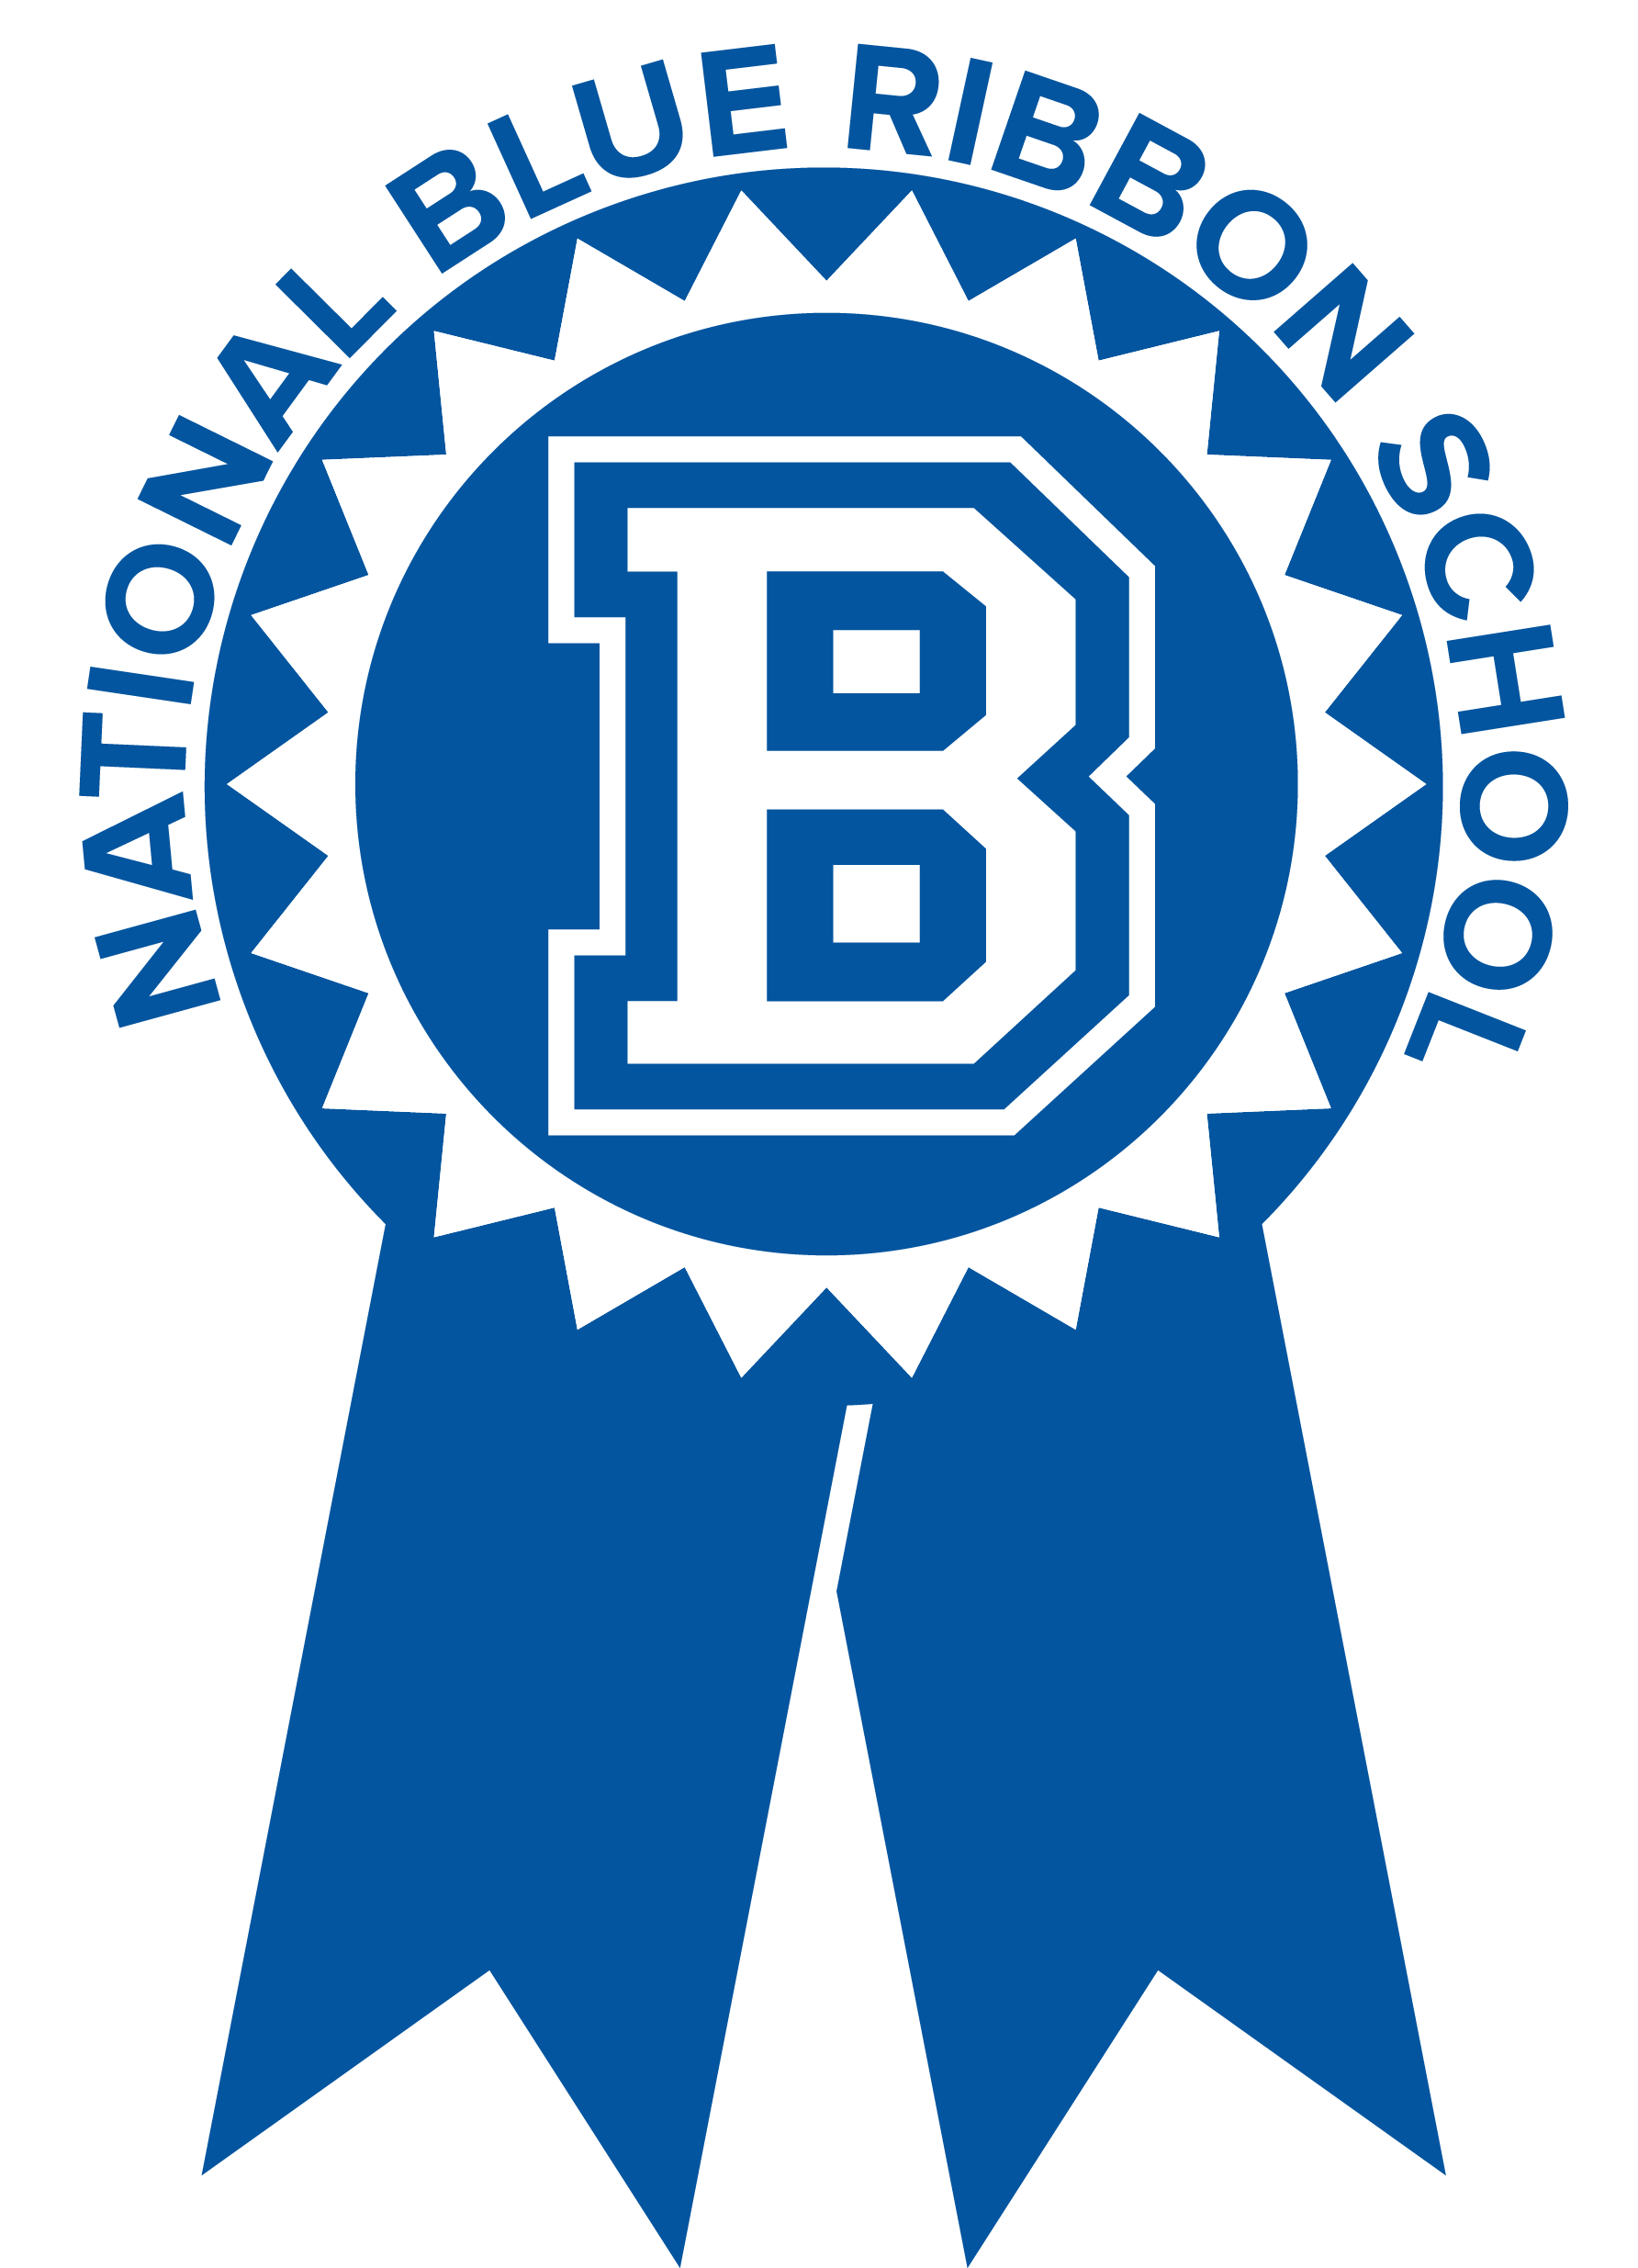 Bradley International National Blue Ribbon School of Excellence